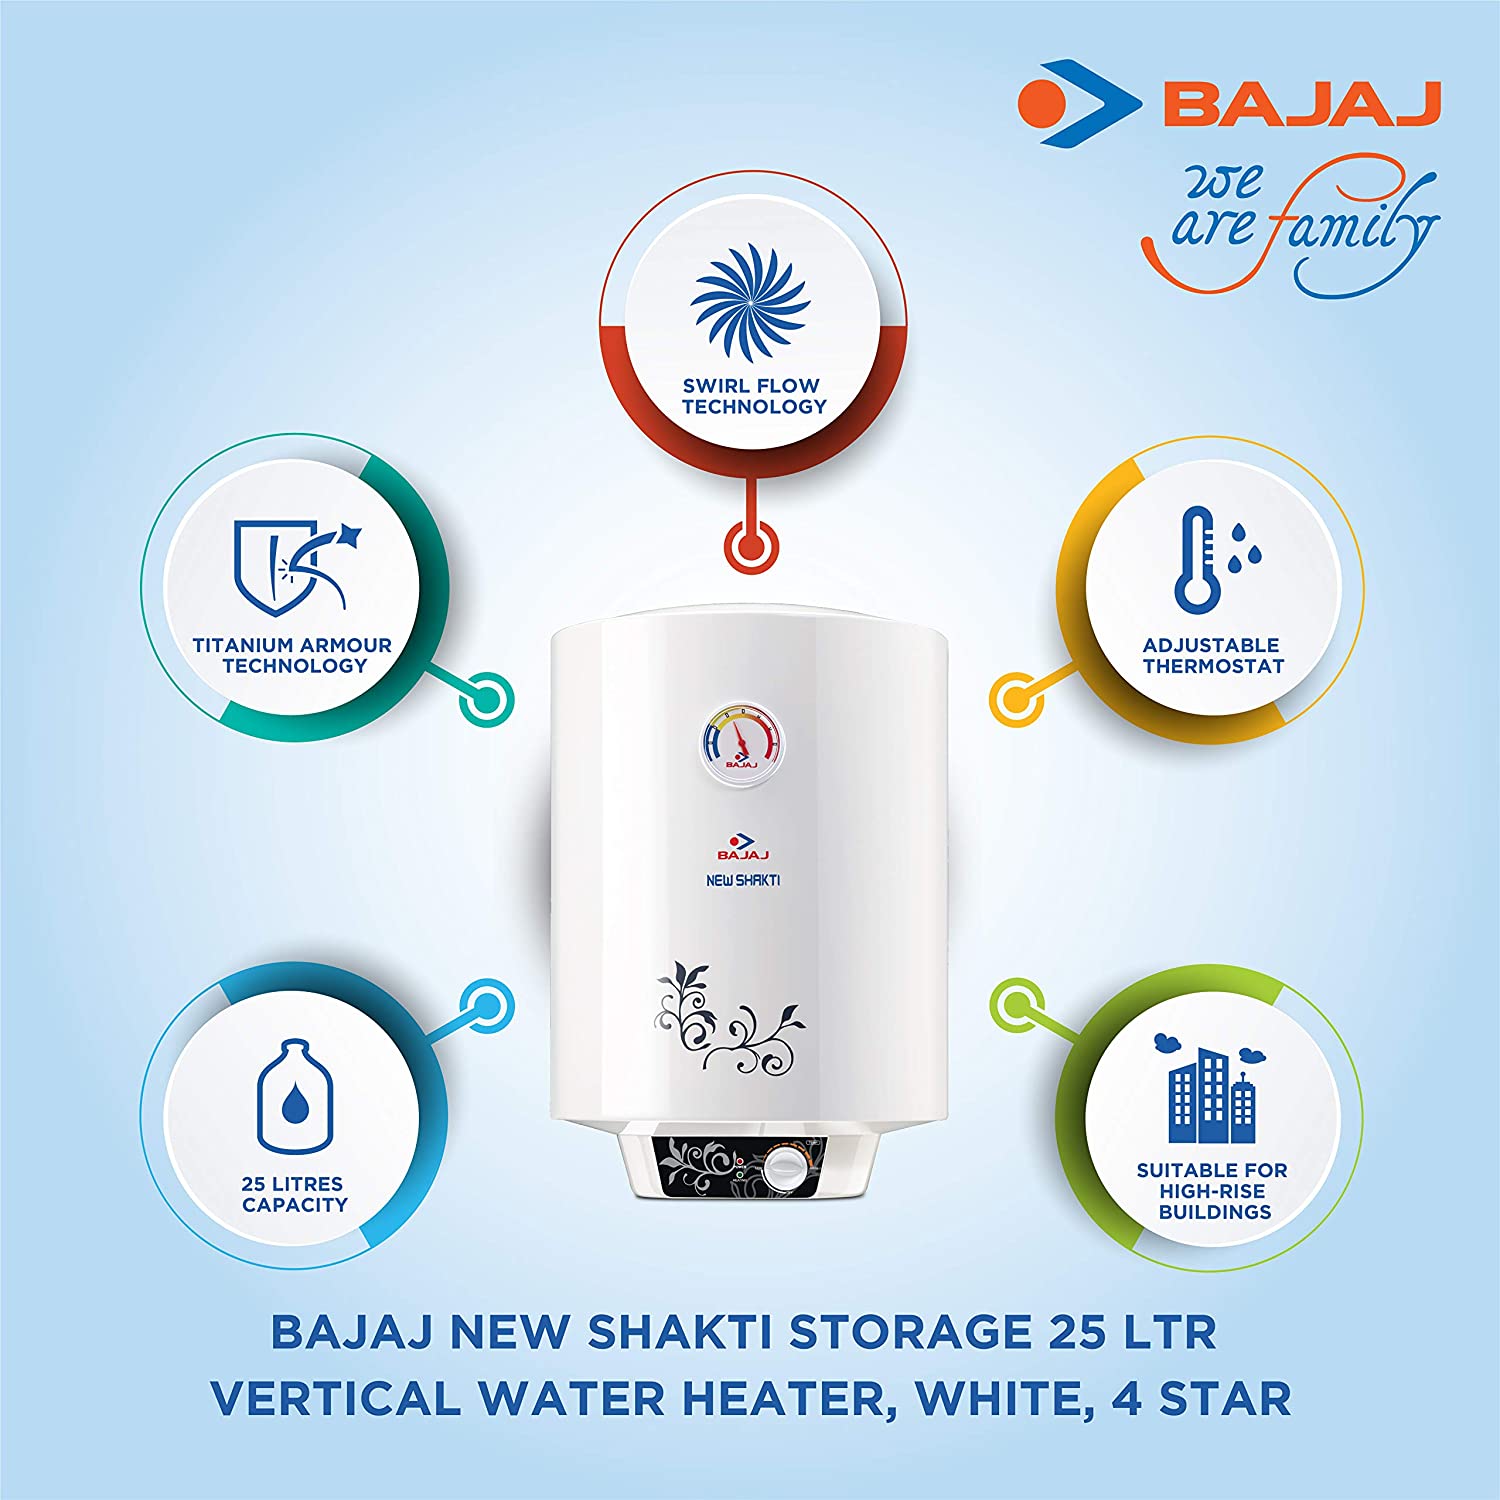 Bajaj New Shakti Storage 25 Litre Vertical Water Heater, White, 4 Star (43.3 x 44.1 x 57 cms)